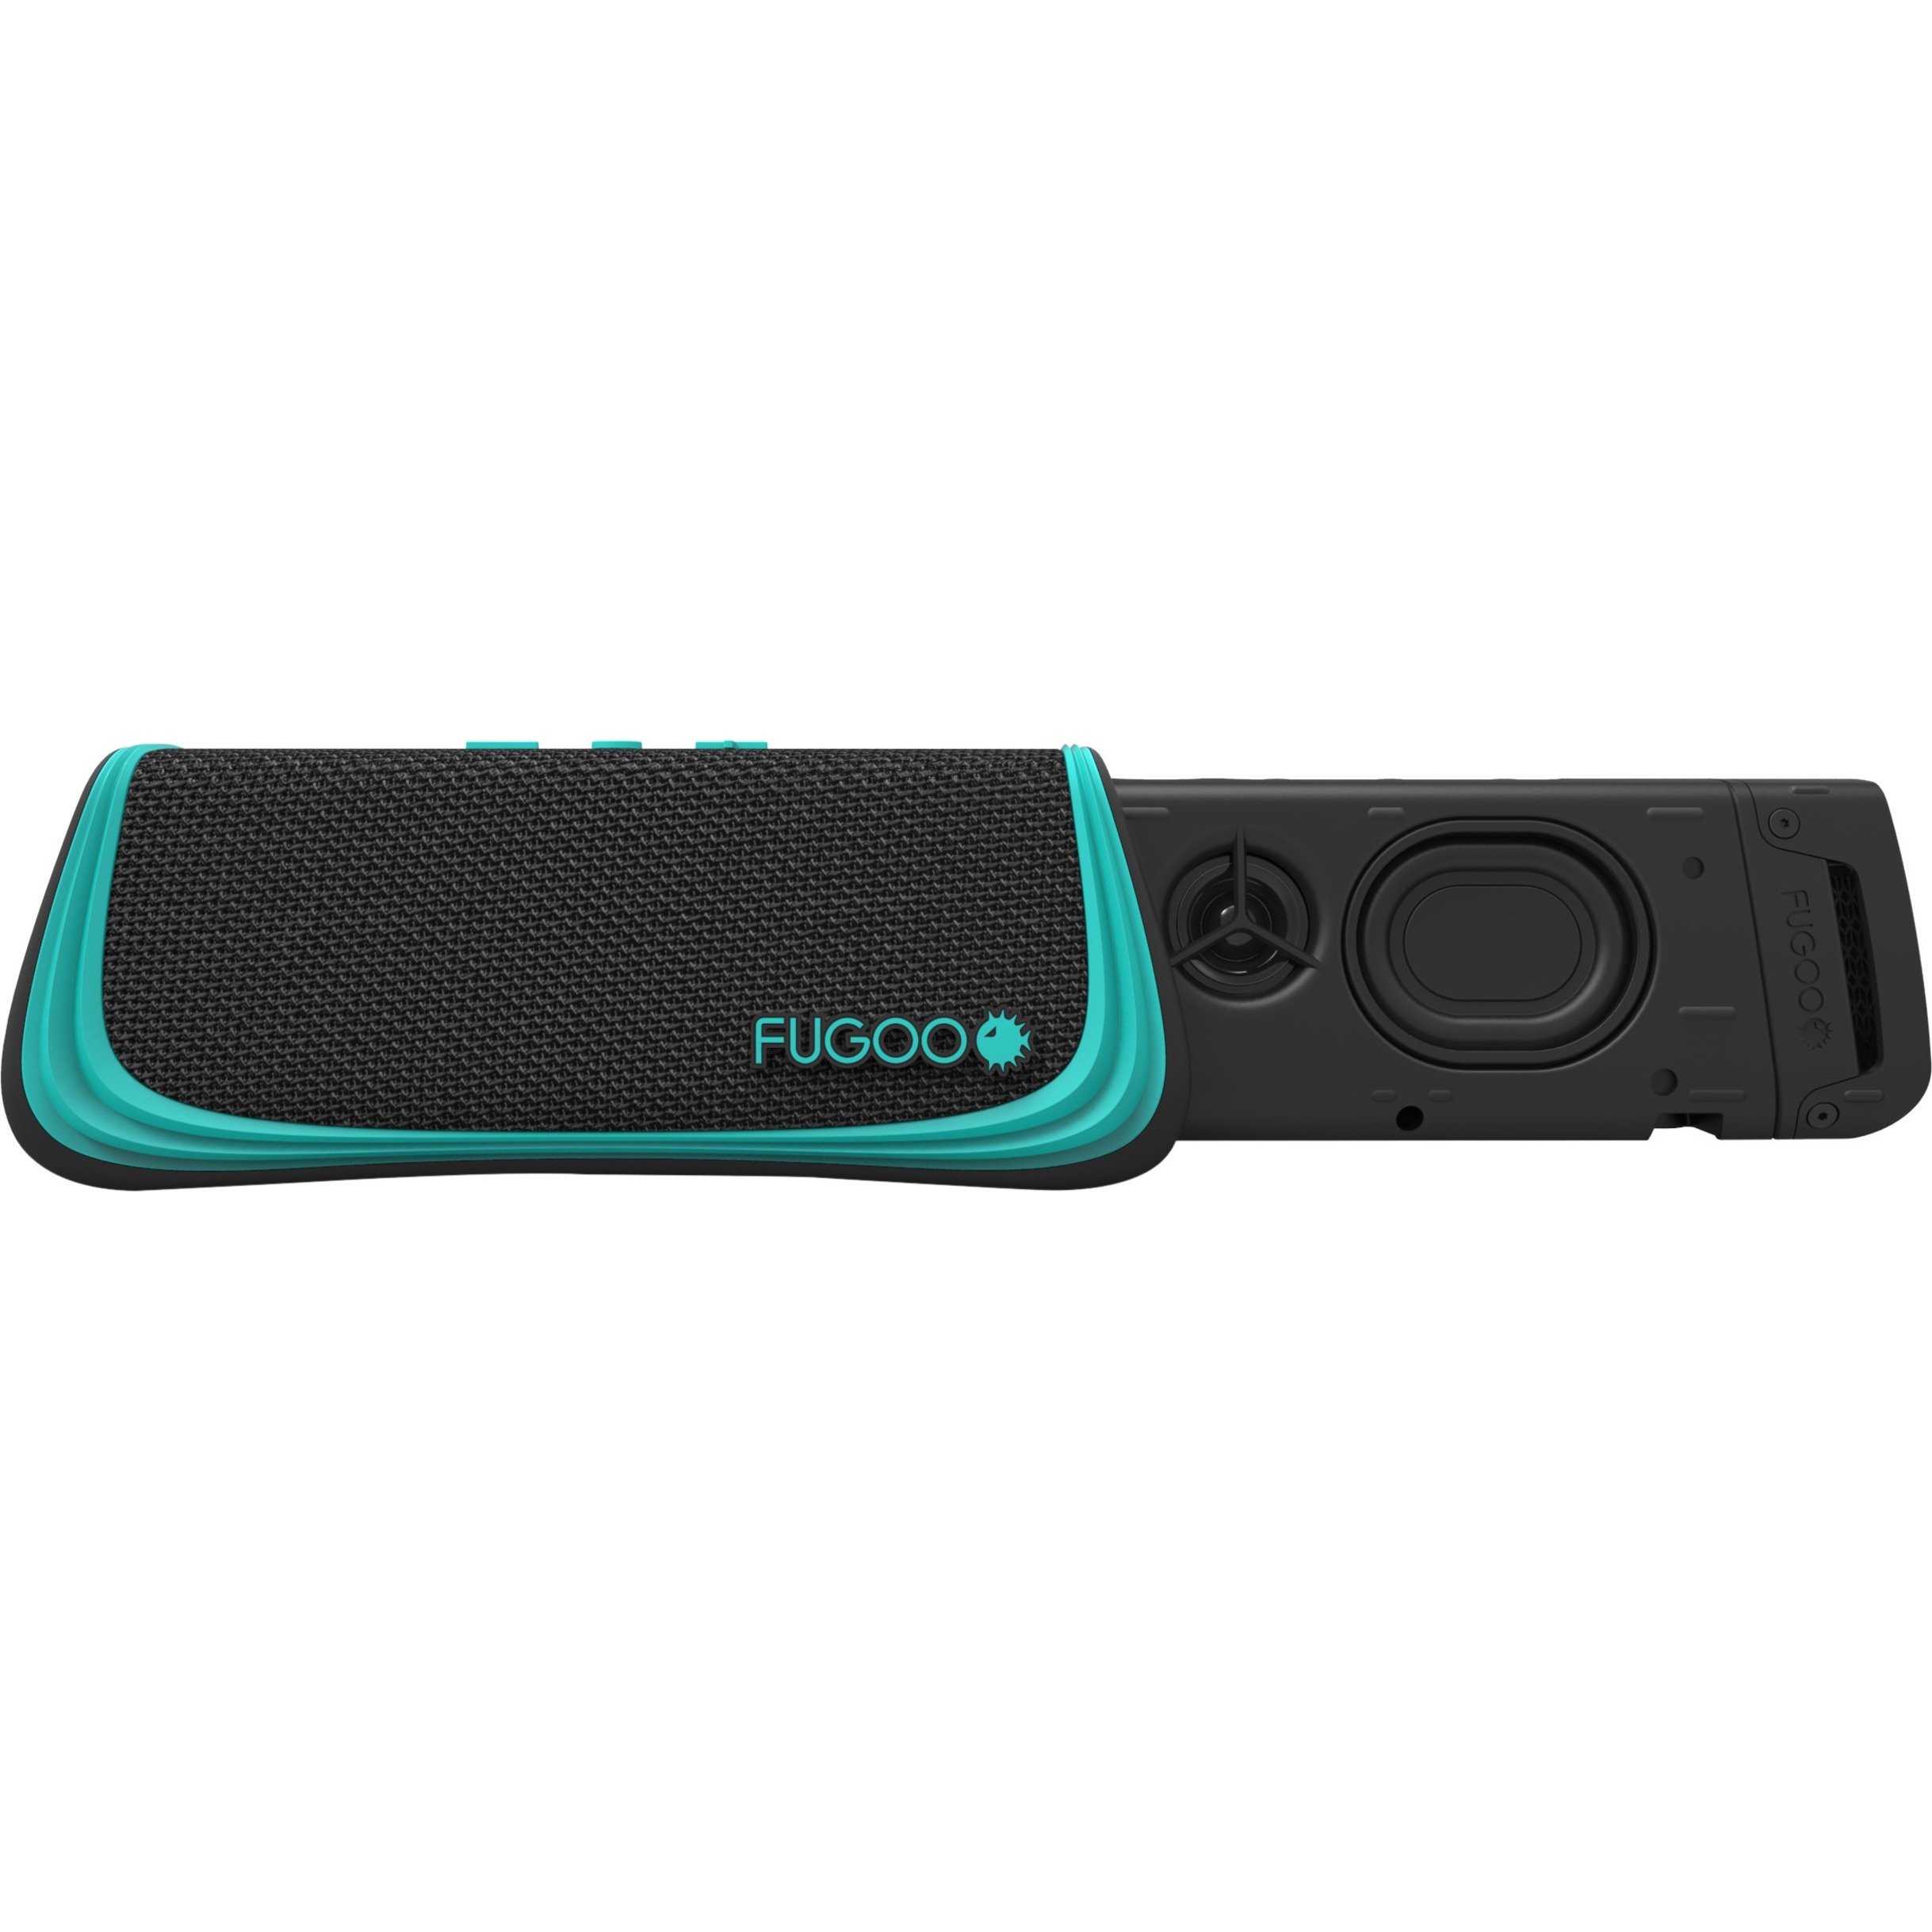 Fugoo Portable Bluetooth Speaker, Black, SPORT - image 1 of 5